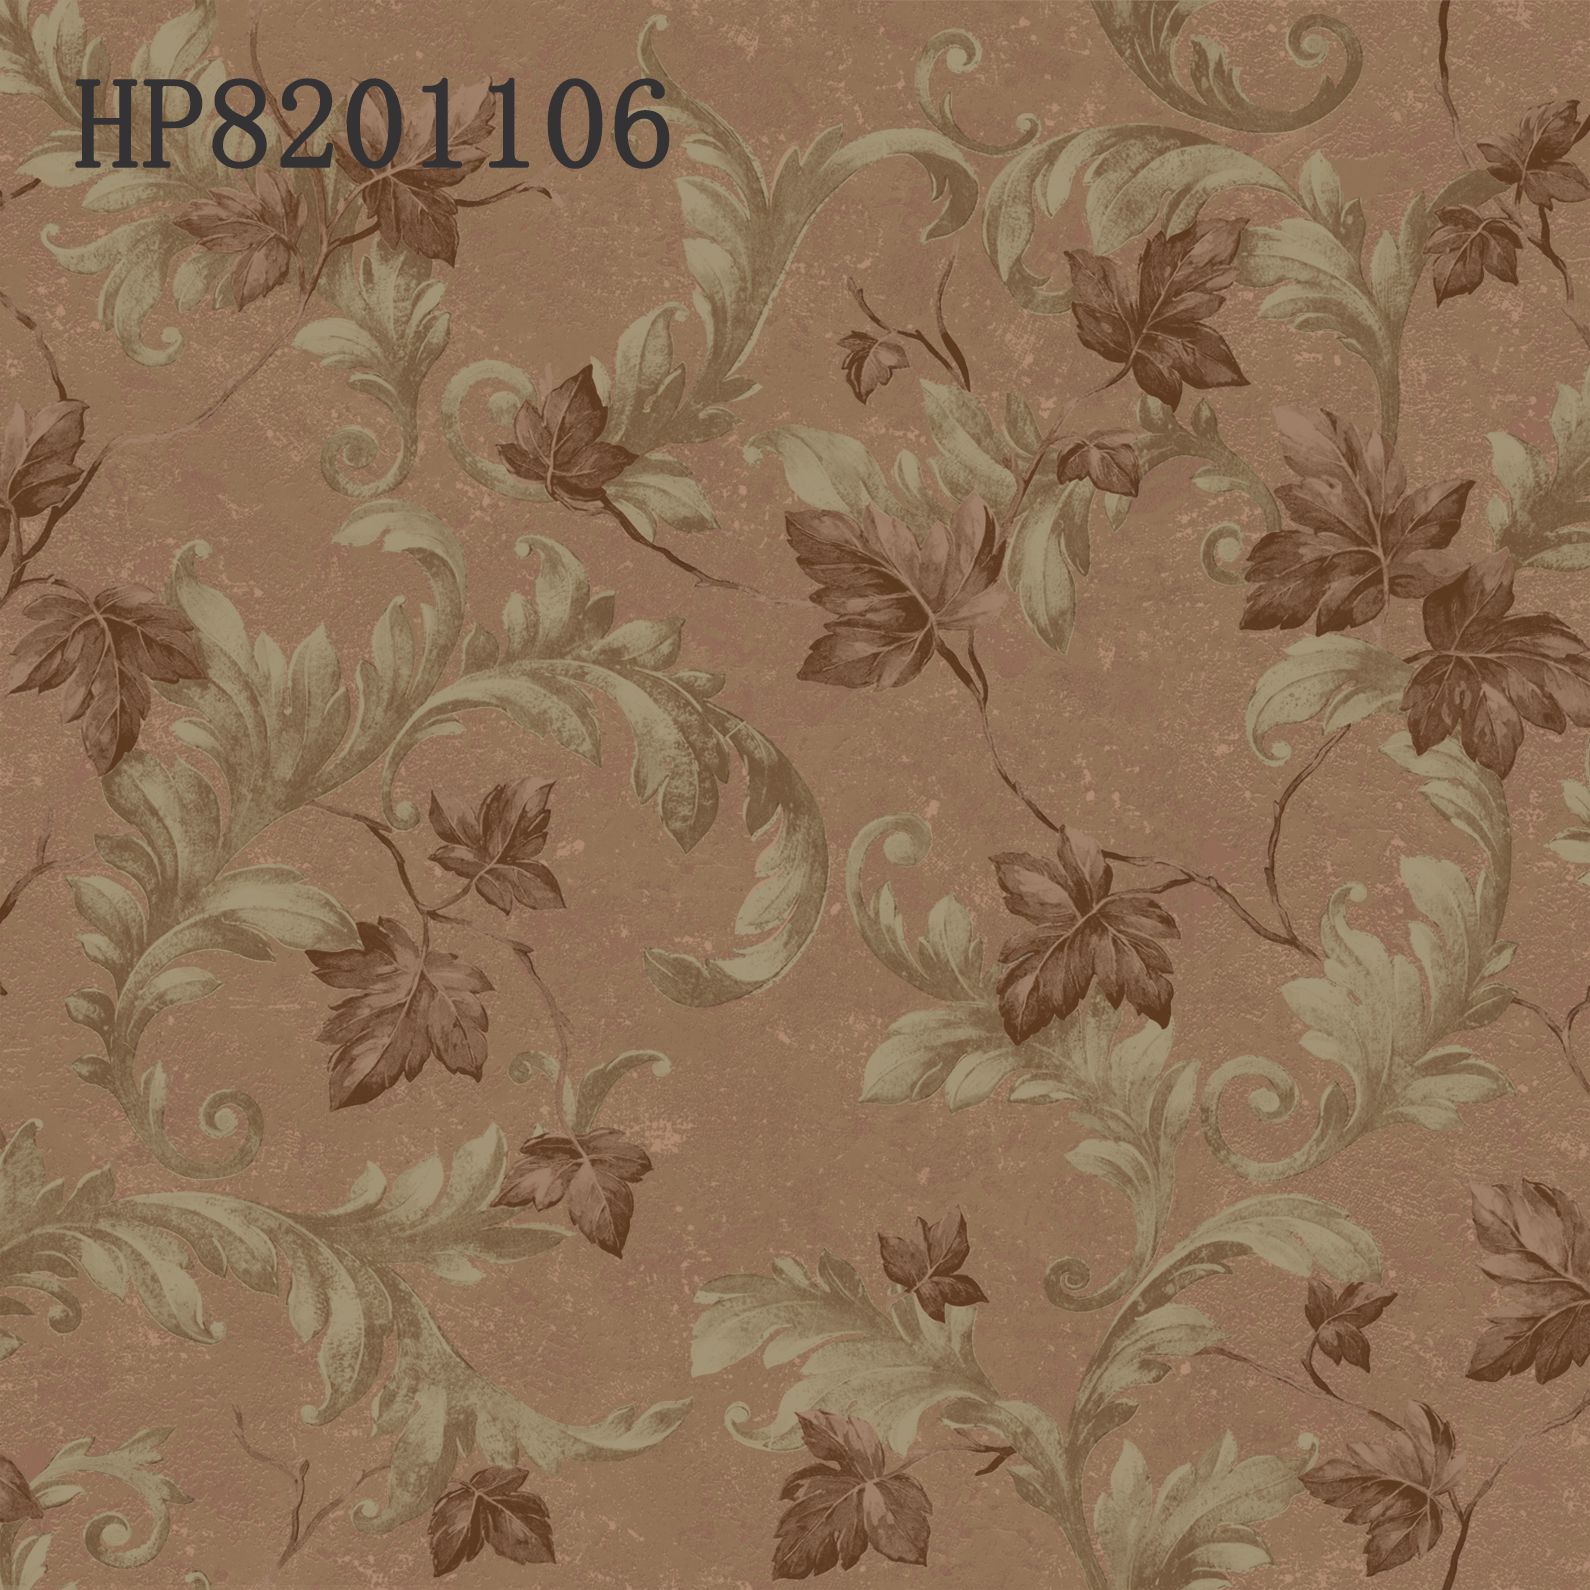 Environment-friendly Pvc Wallpapers HP82001106